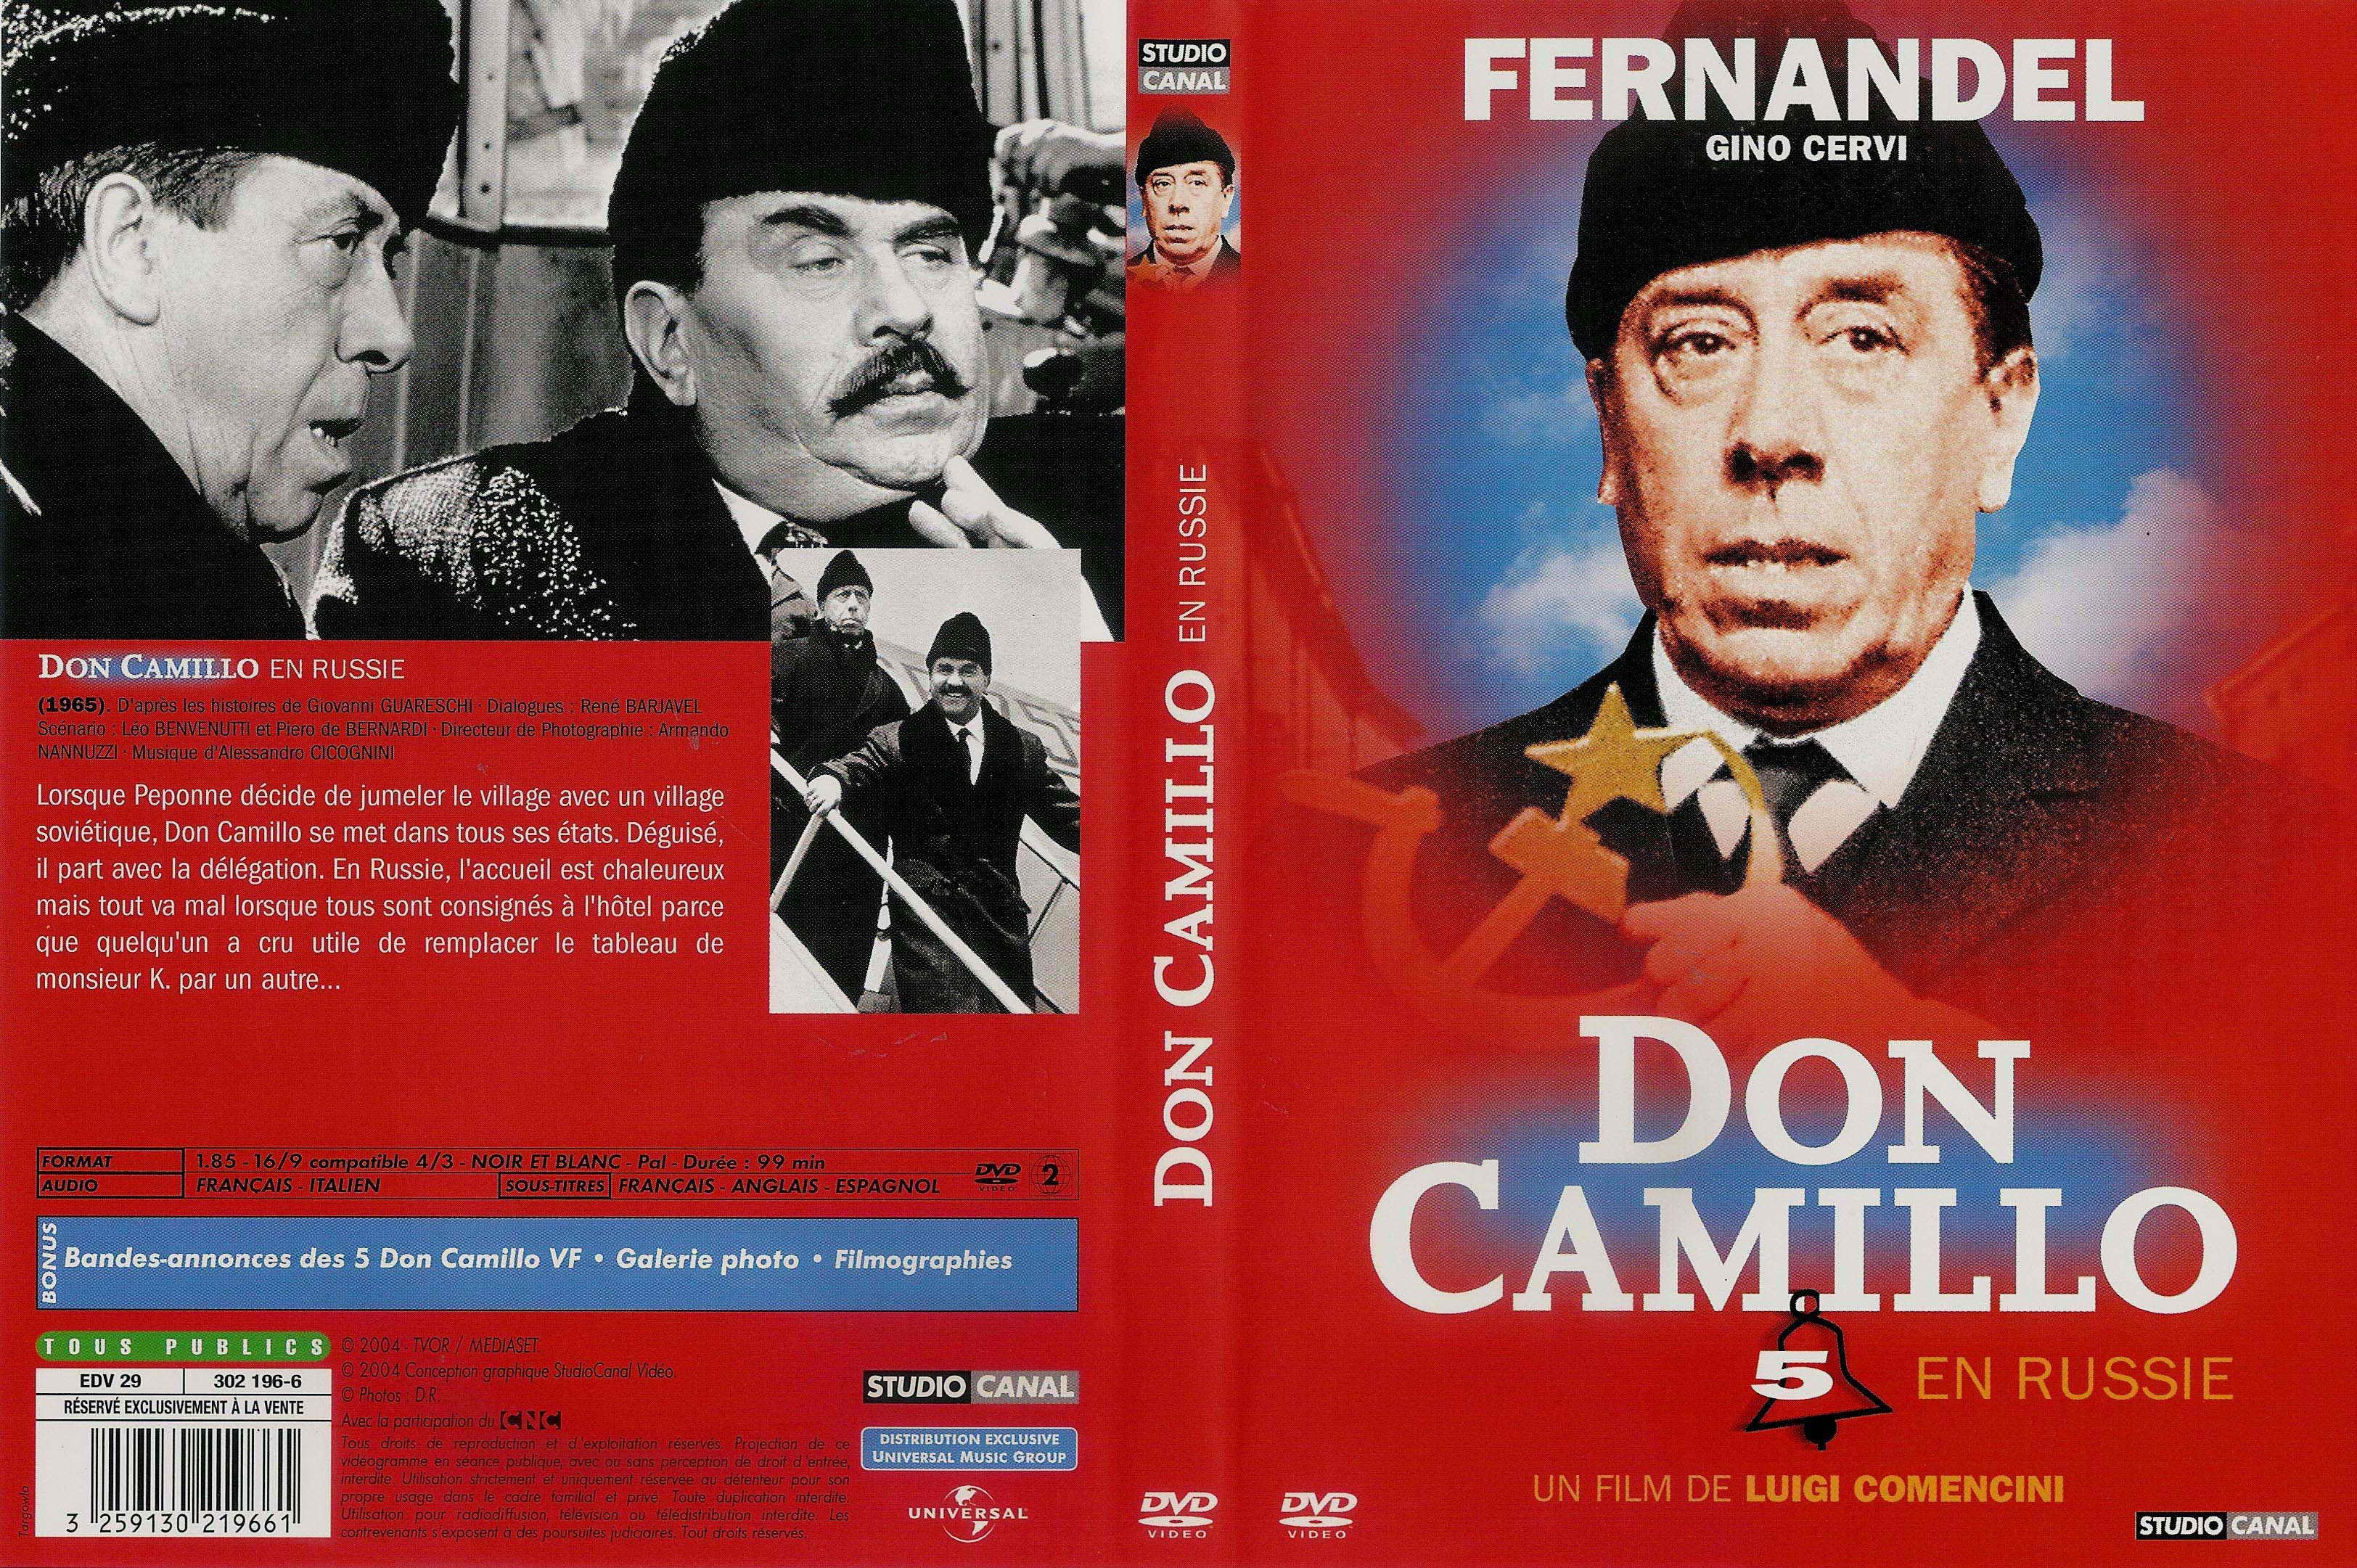 Jaquette DVD Don Camillo - Don Camillo en Russie v2